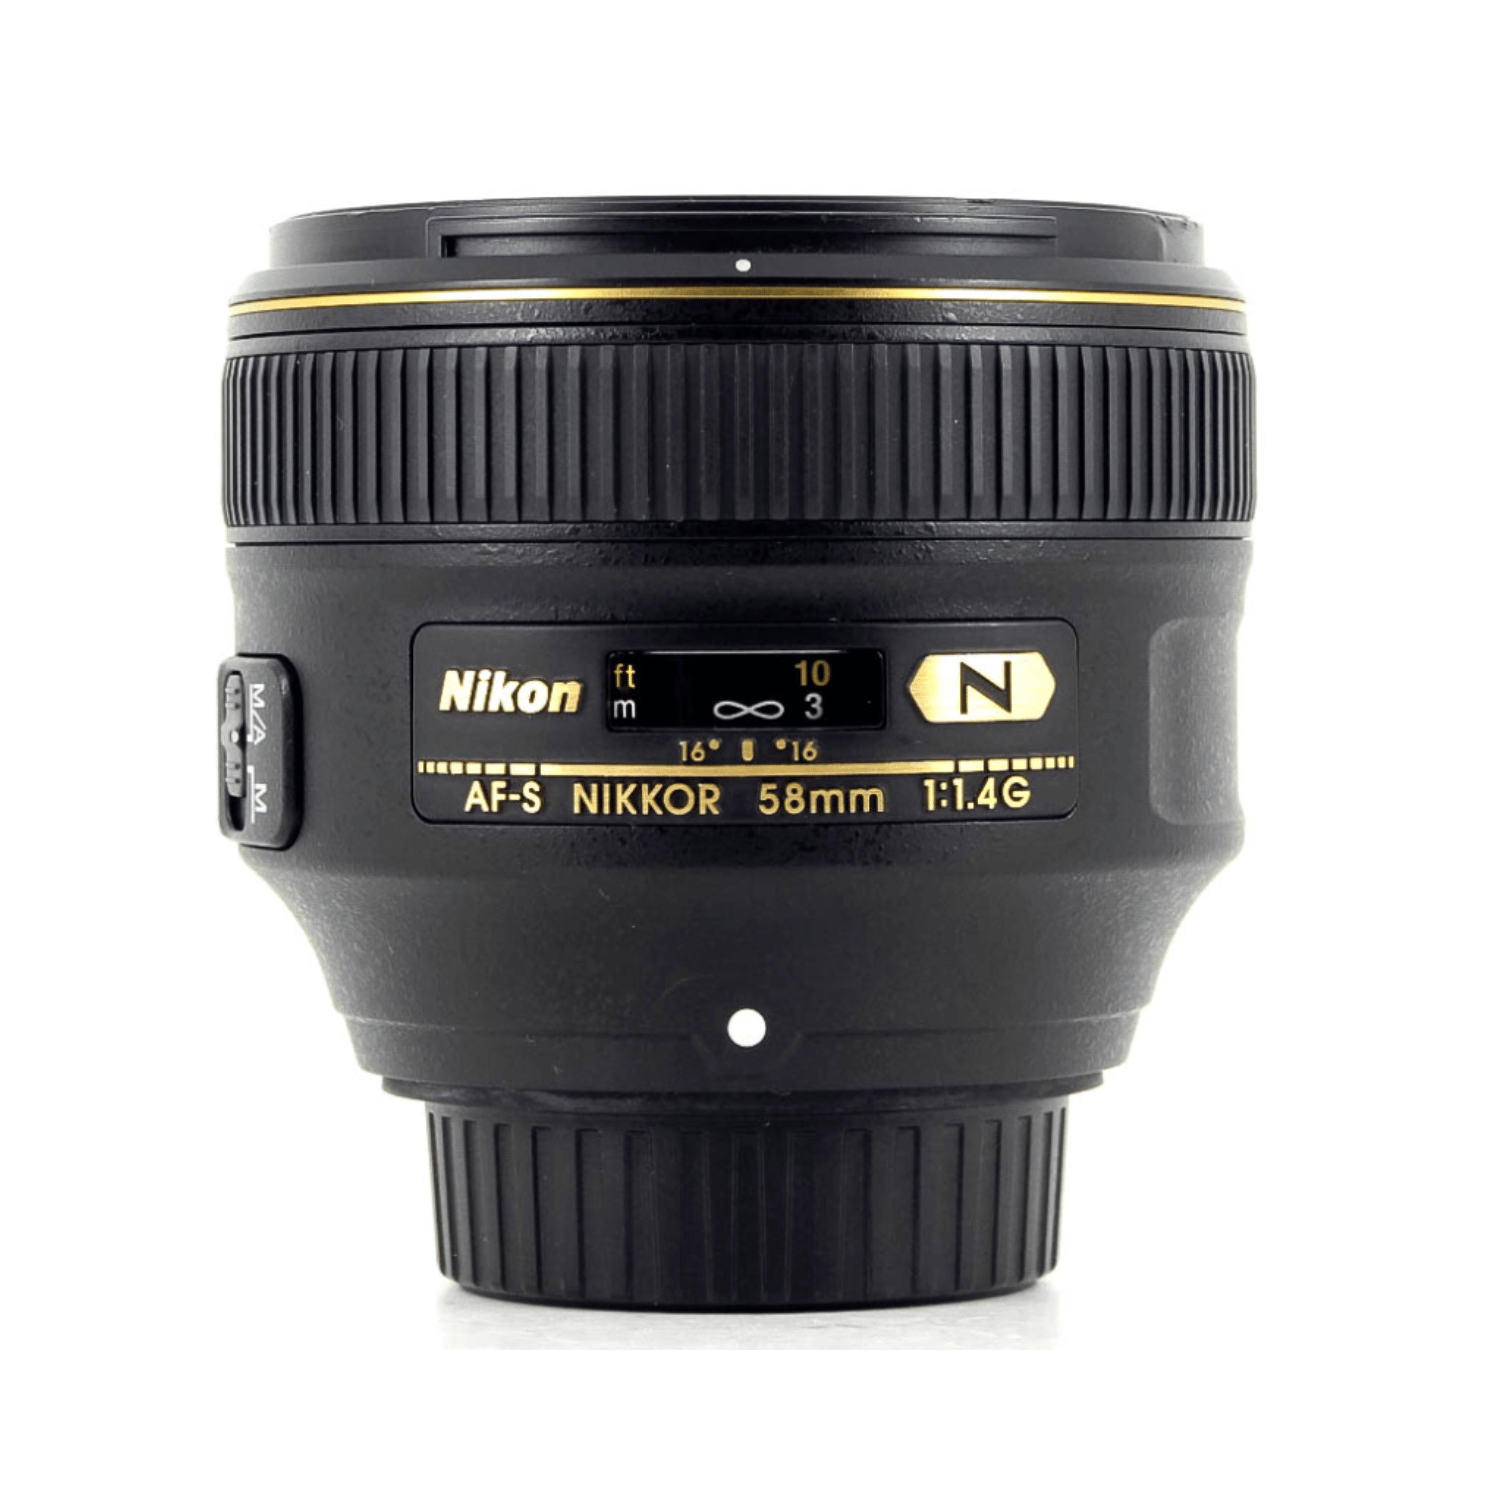 Nikon 58mm F1.4G ED AF-S - Garanzia 4 anni Nital - Cine Sud è da 47 anni sul mercato! 311070